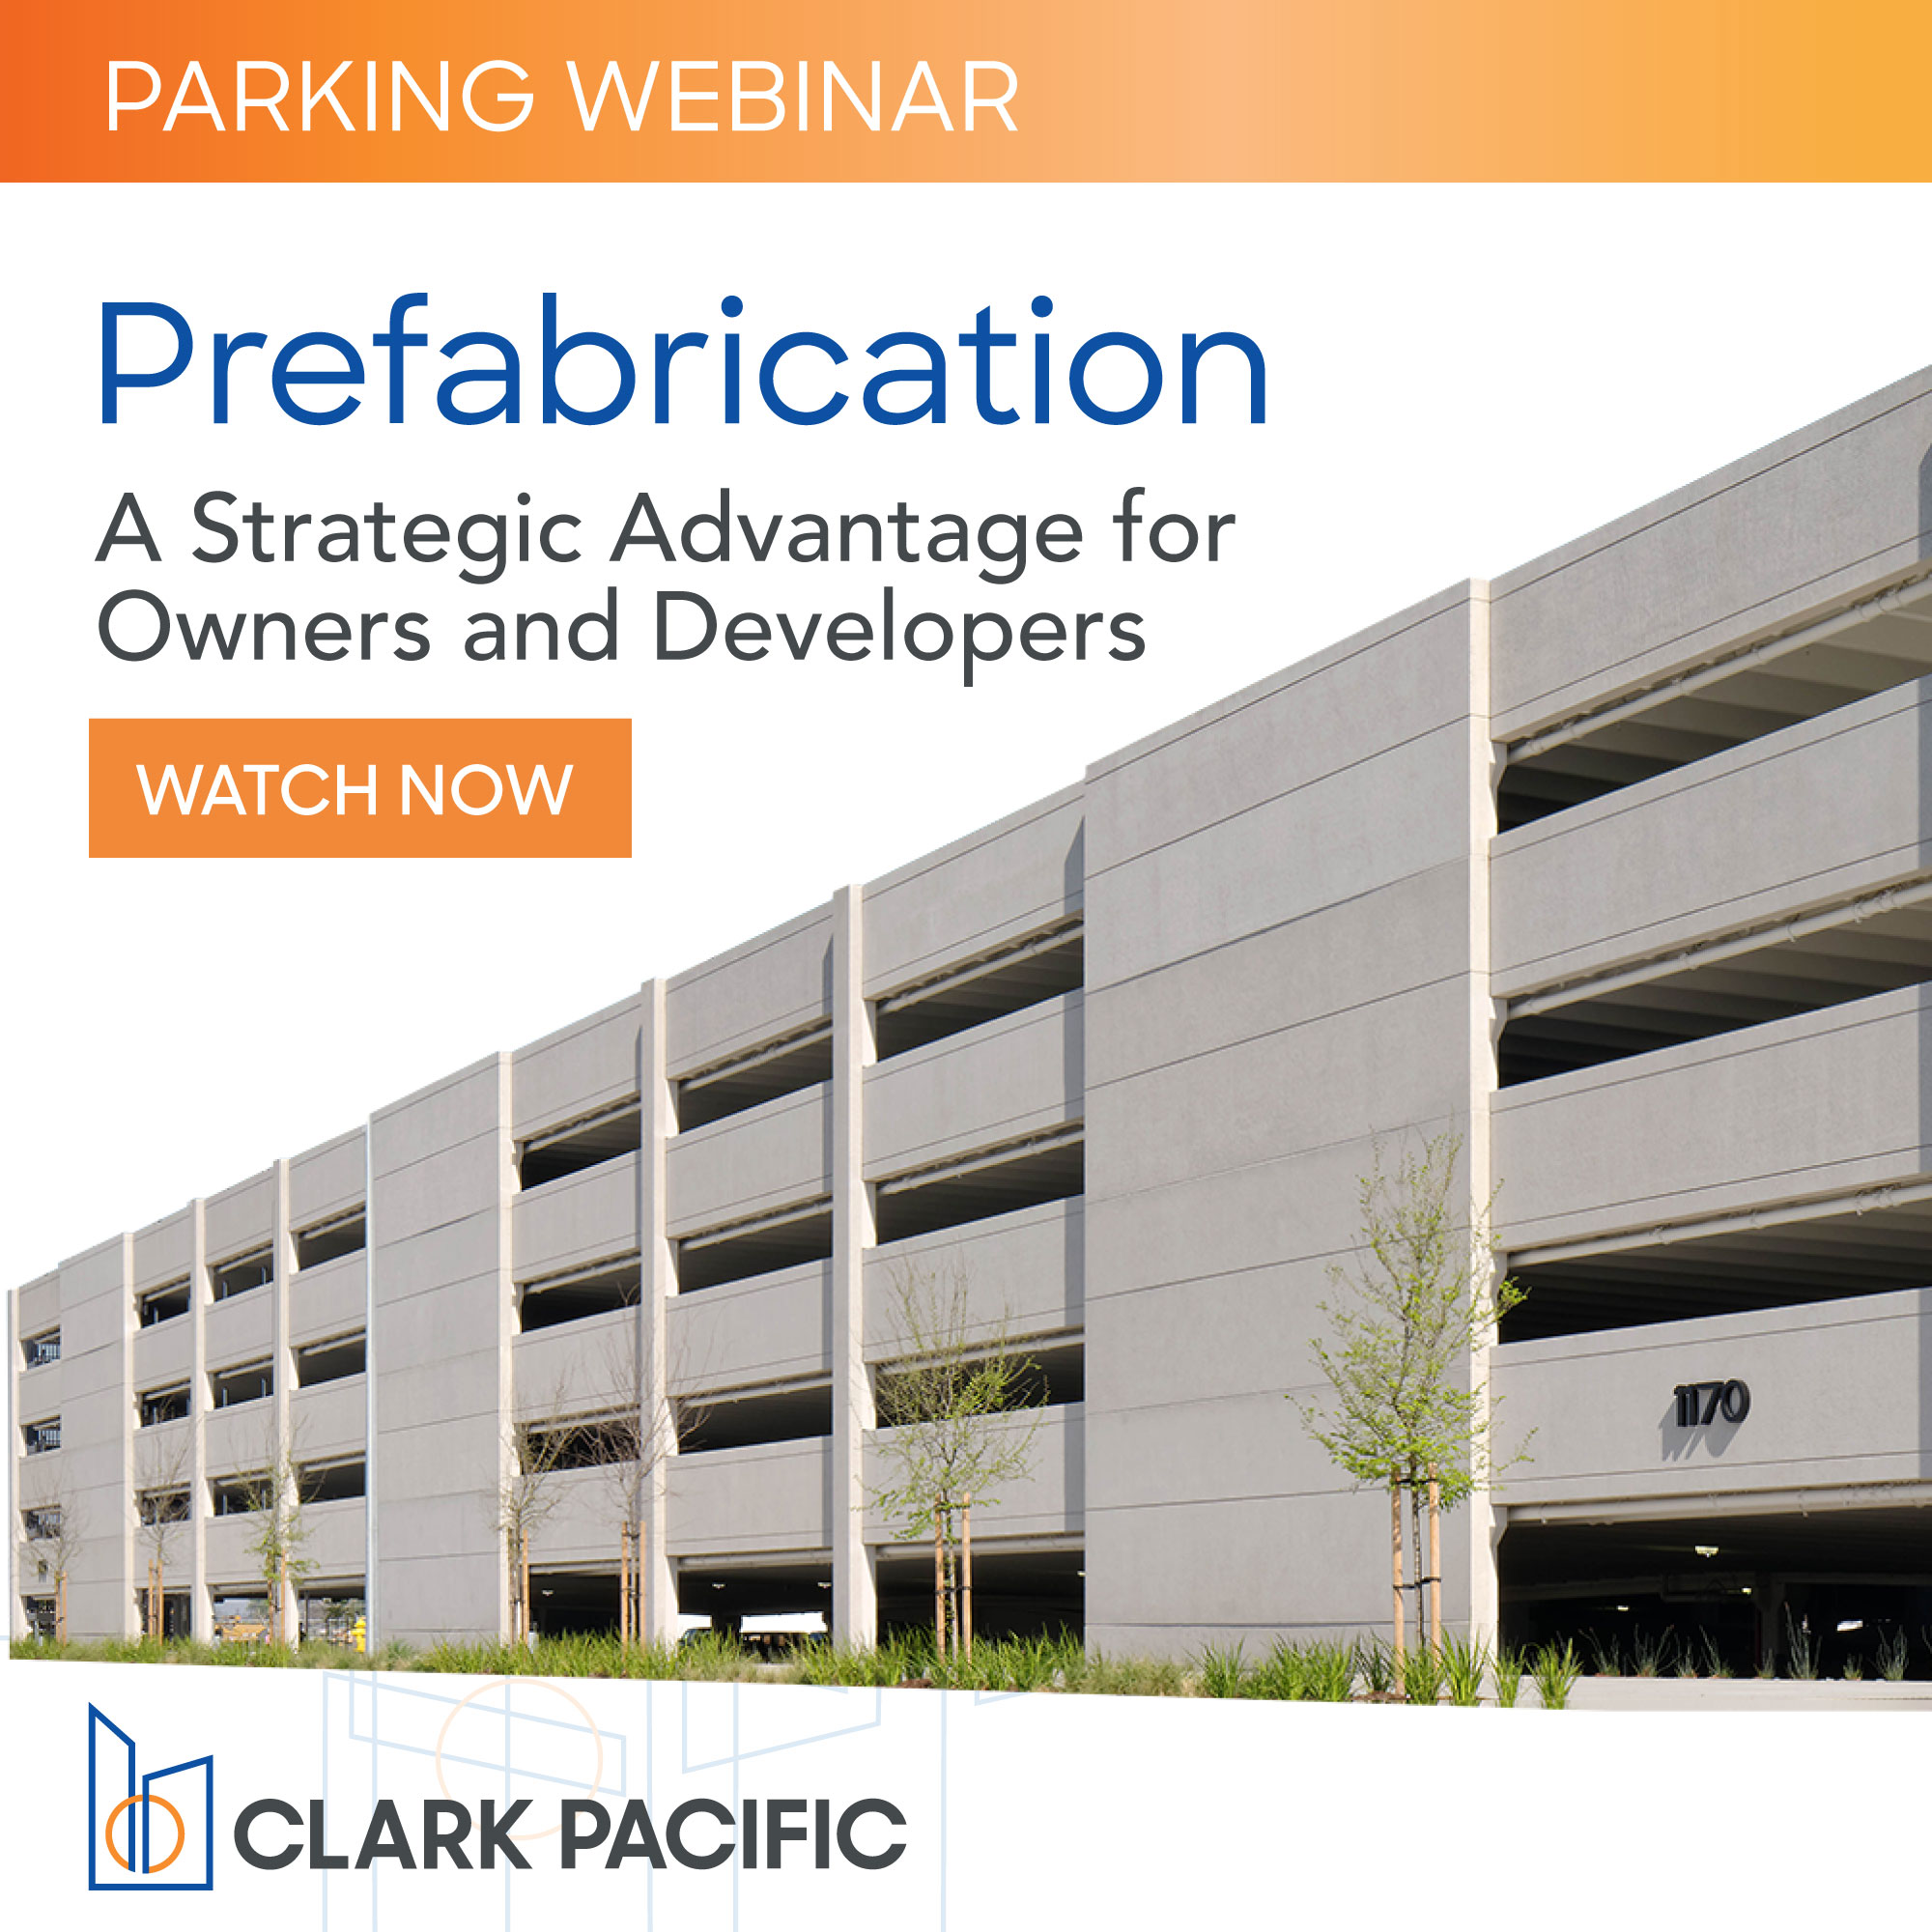 Watch our Prefabrication for parking webinar